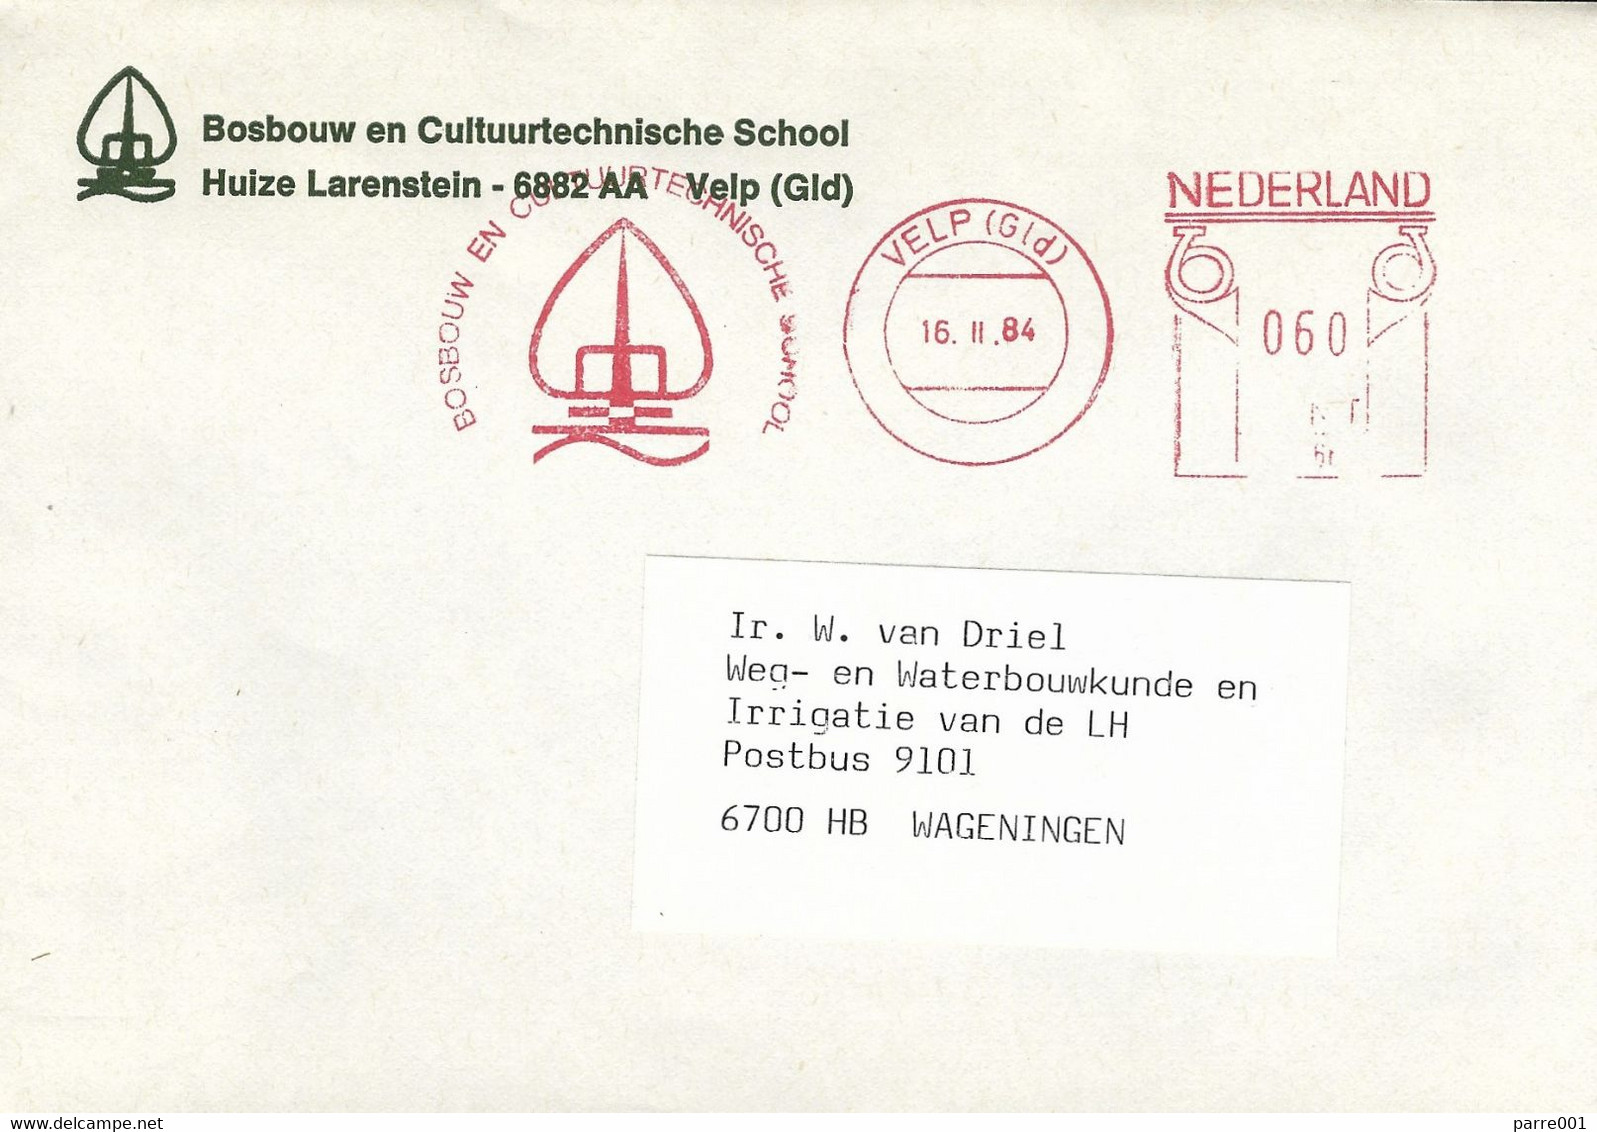 Nederland Netherlands 1984 Velp Meter Postalia “P” PR4665 Forestry School EMA Cover - Macchine Per Obliterare (EMA)